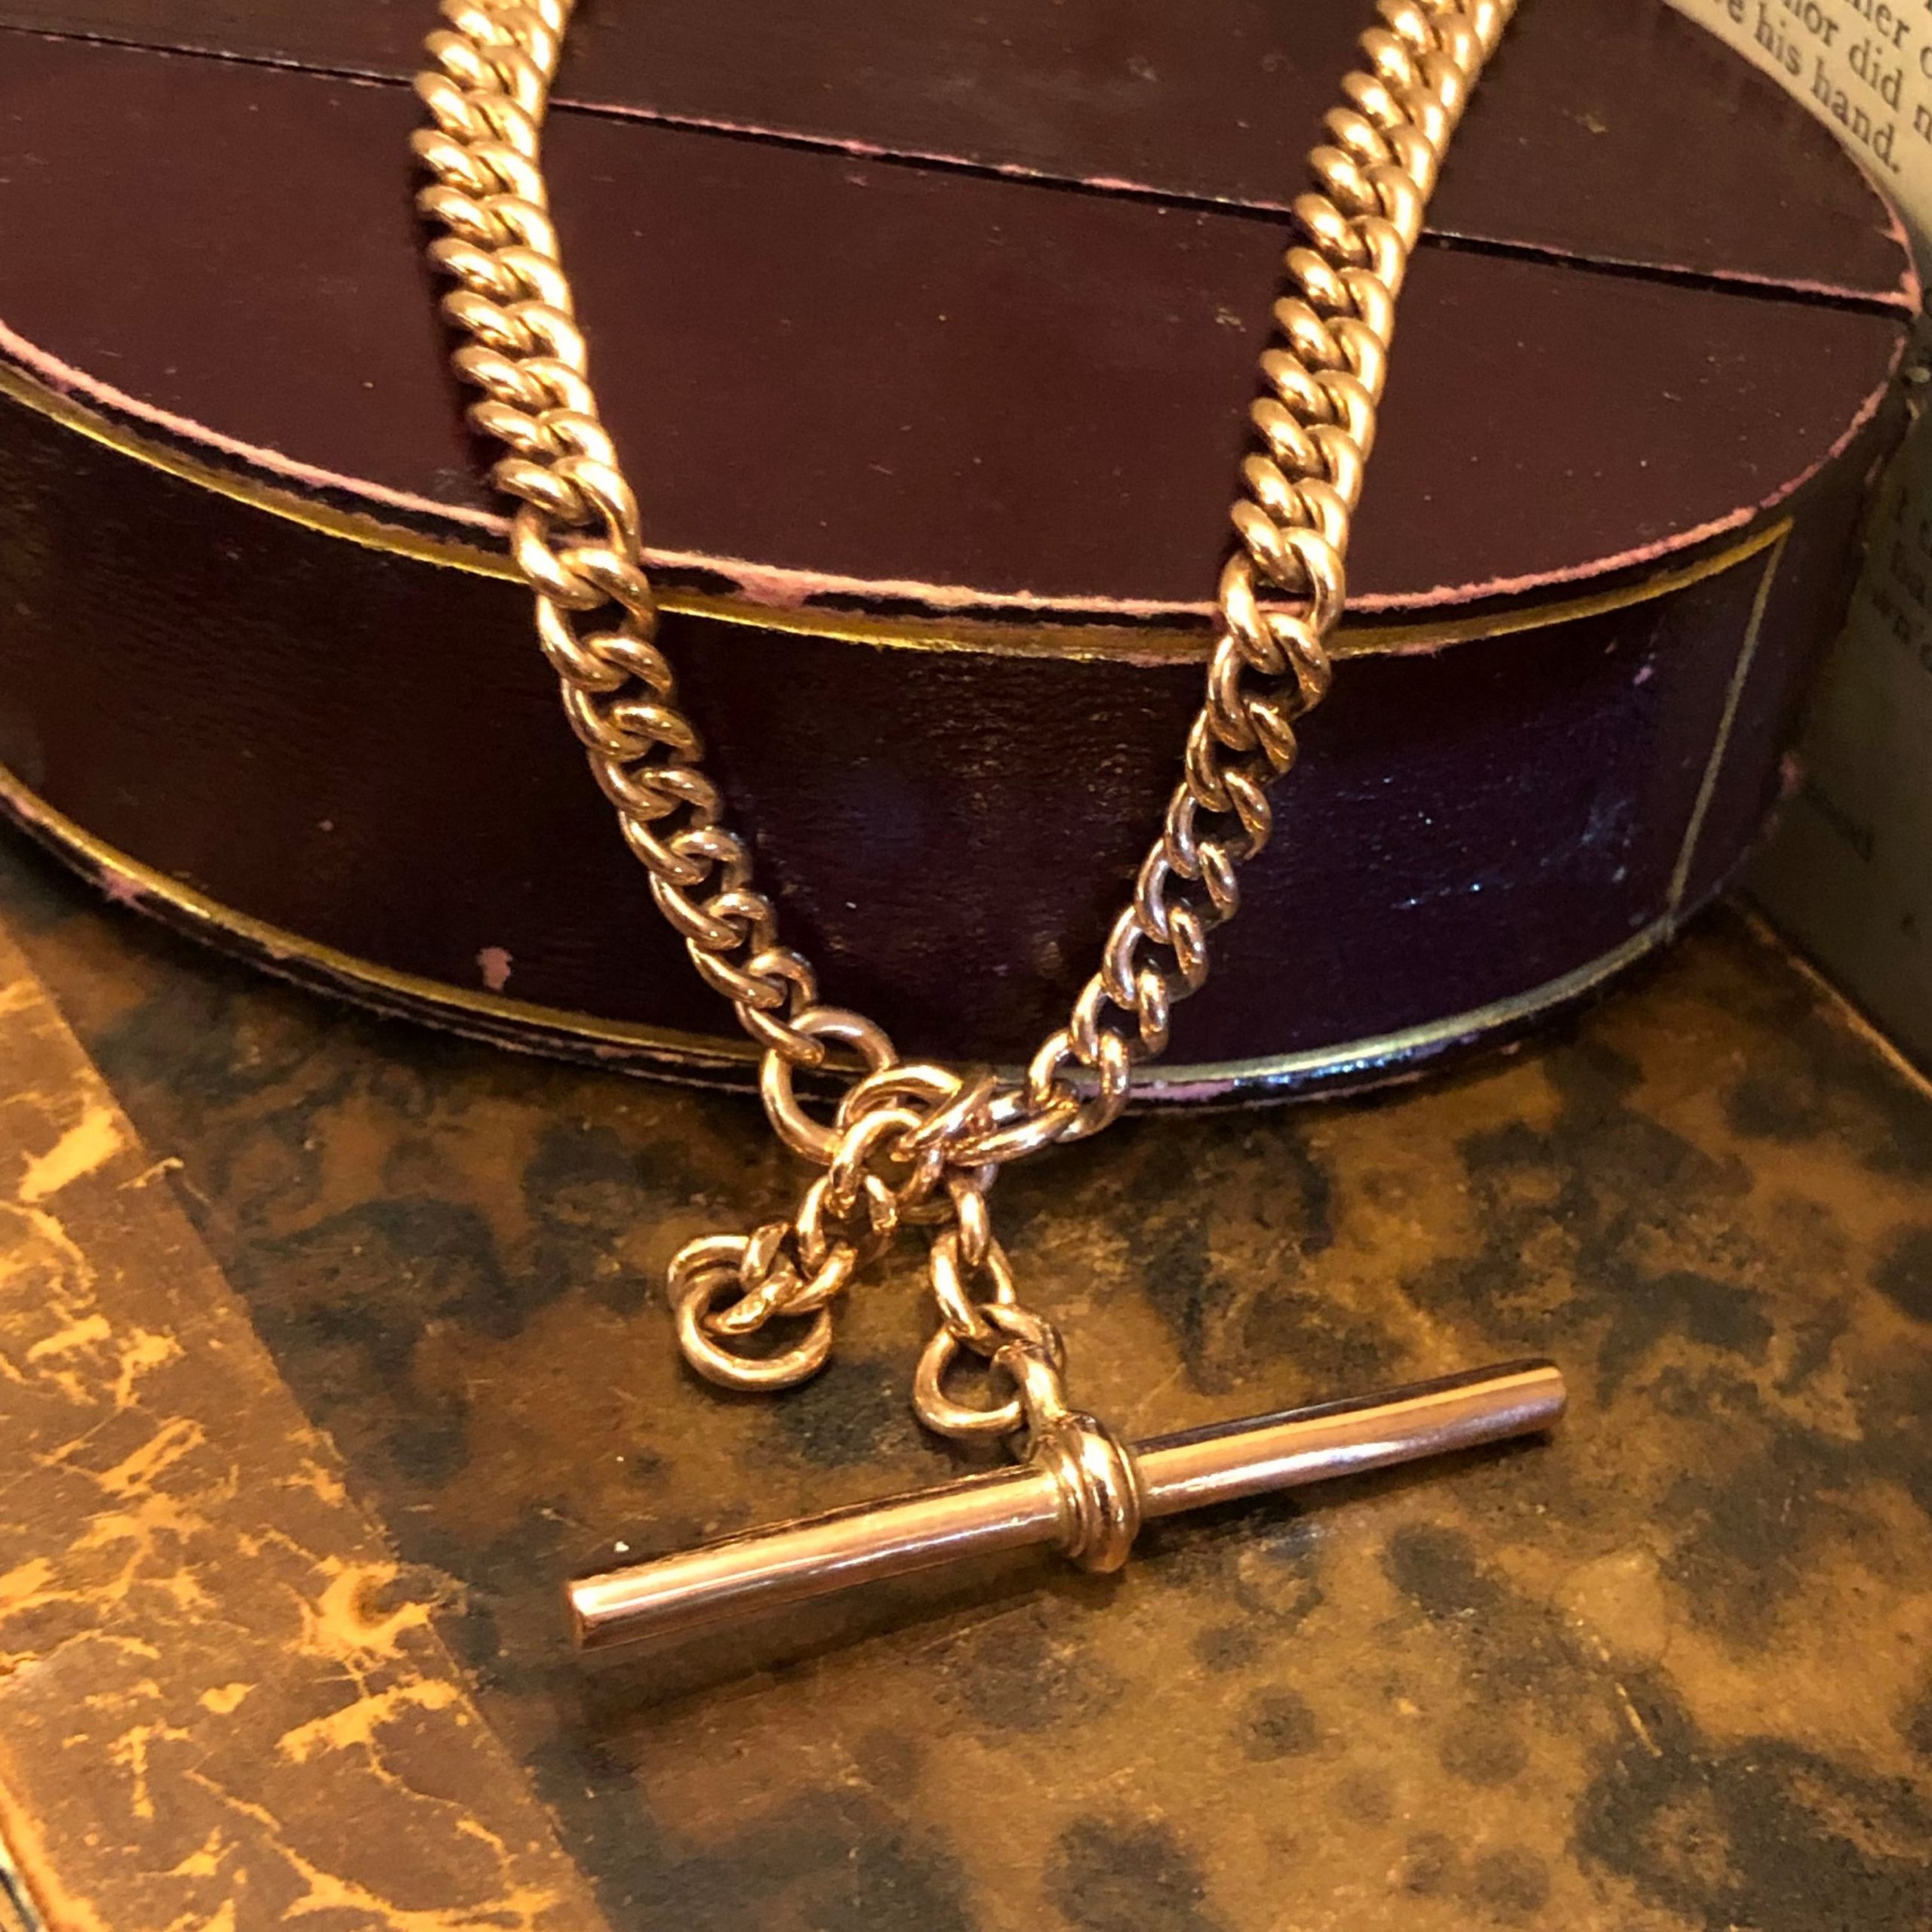 Antique 9ct Rose gold Albert chain, watch chain necklace | eBay